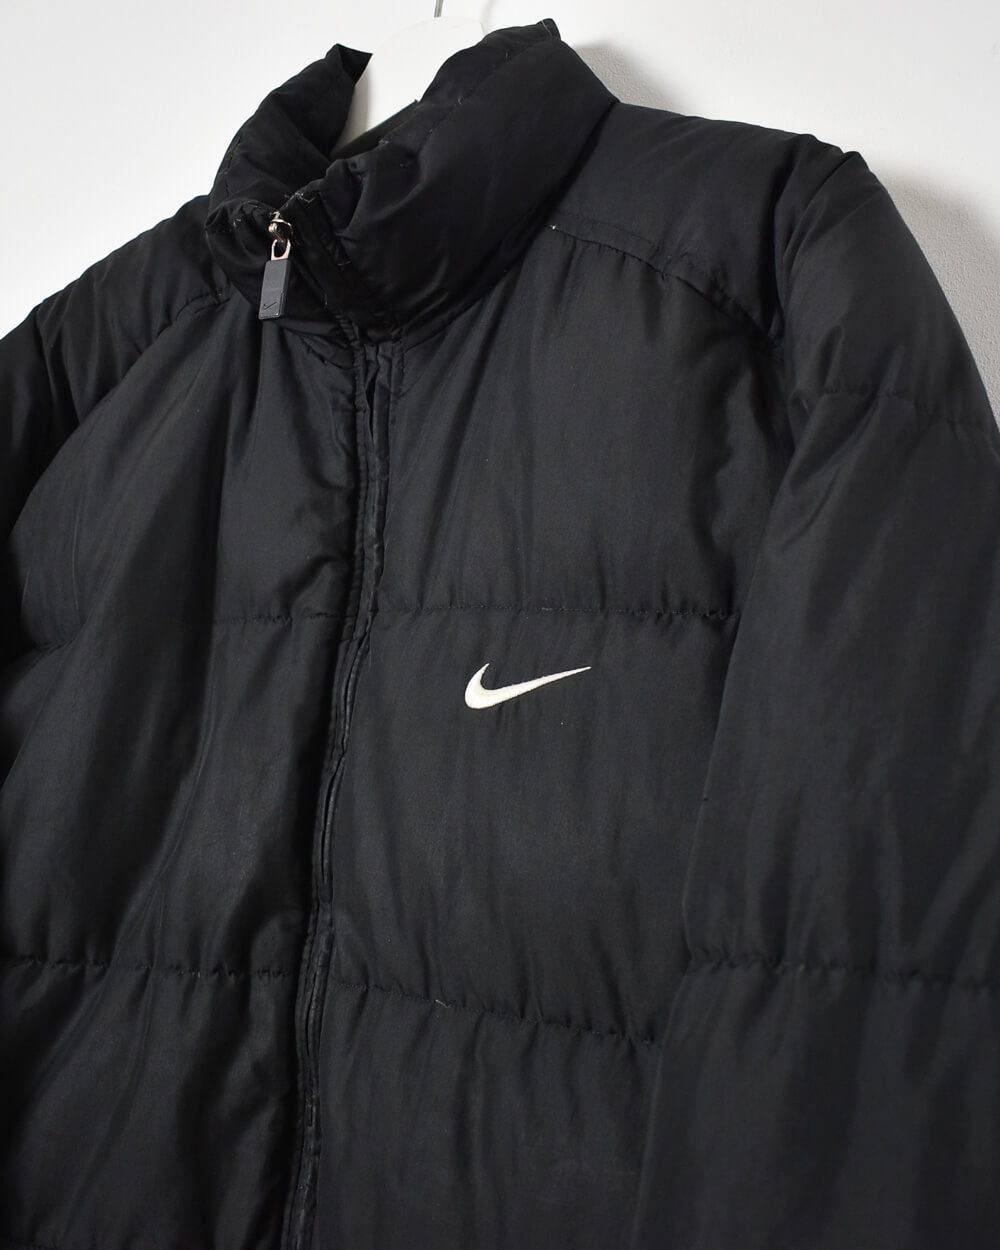 Black Nike Puffer Jacket - Medium